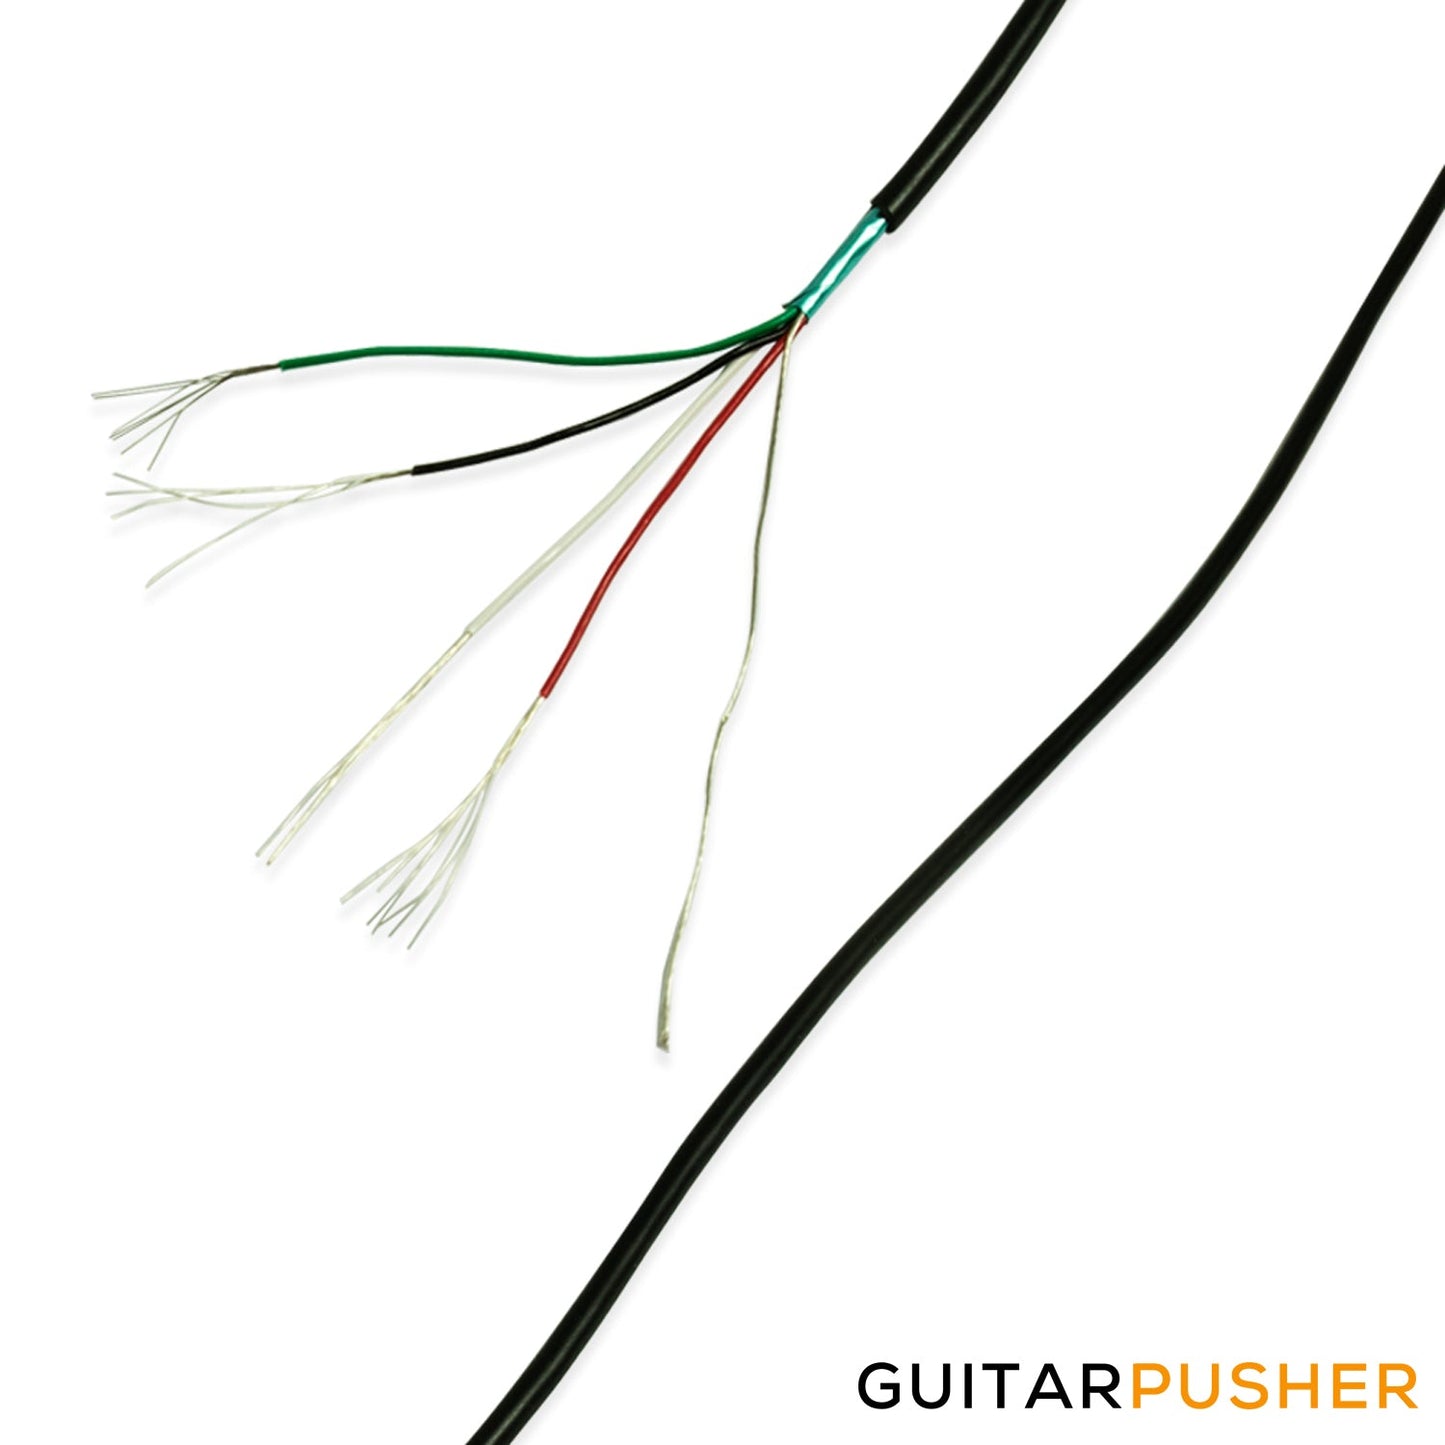 Gavitt Shielded Guitar Wire